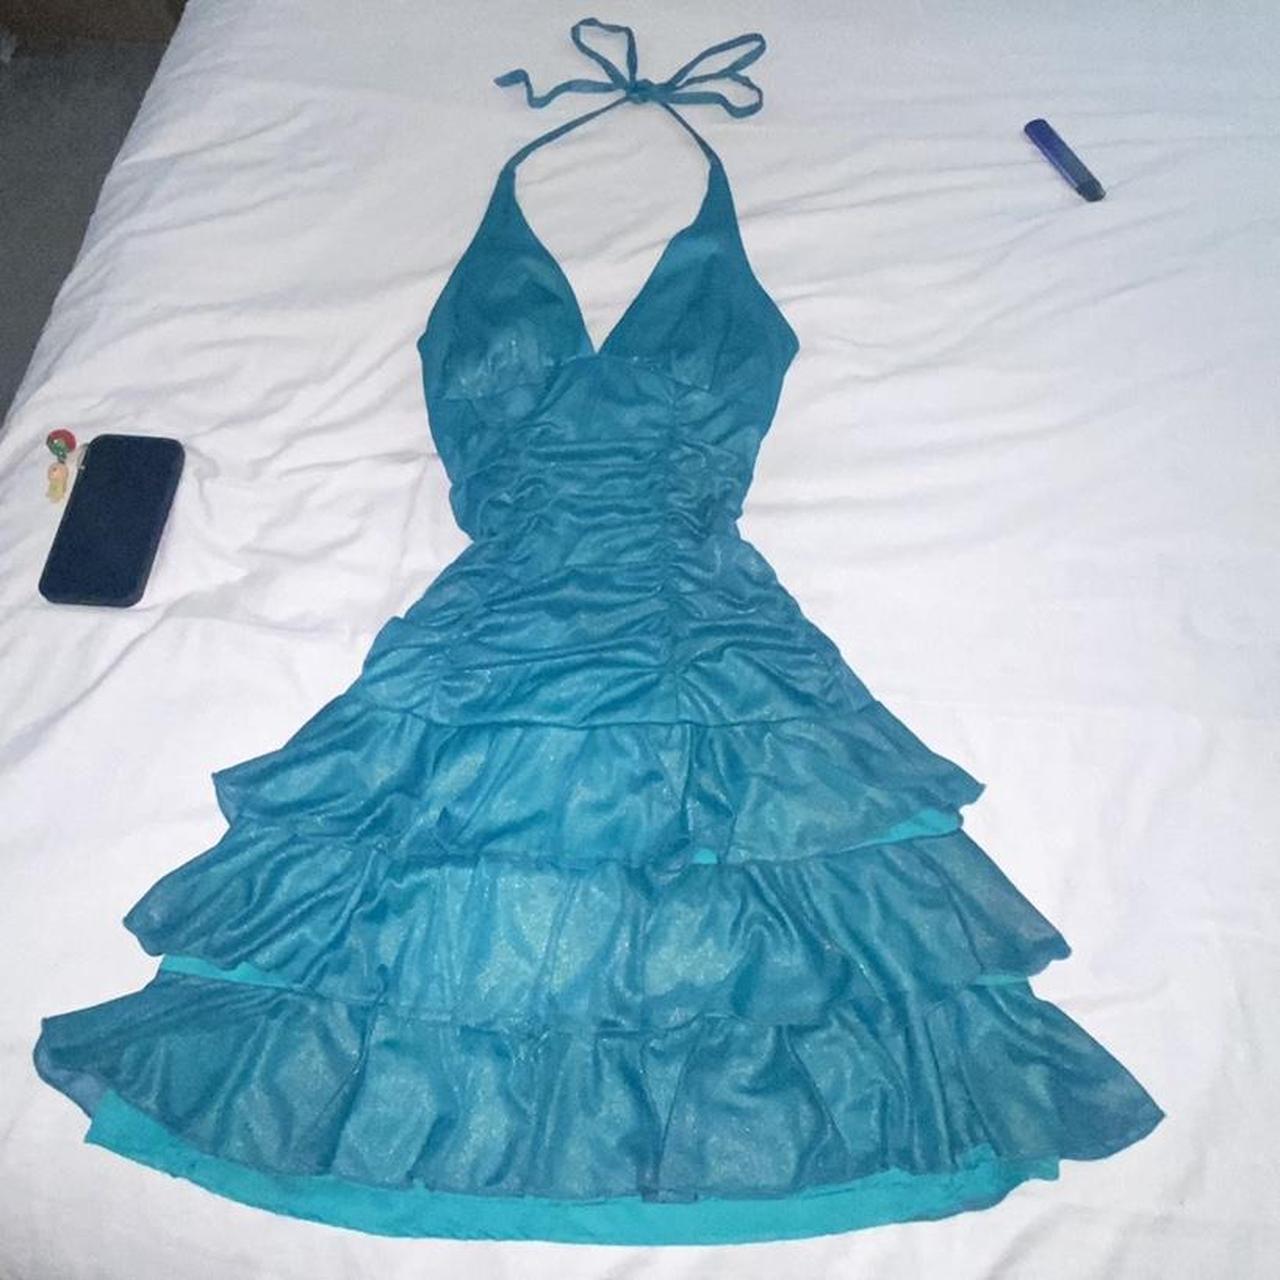 XOXO Women's Blue Dress